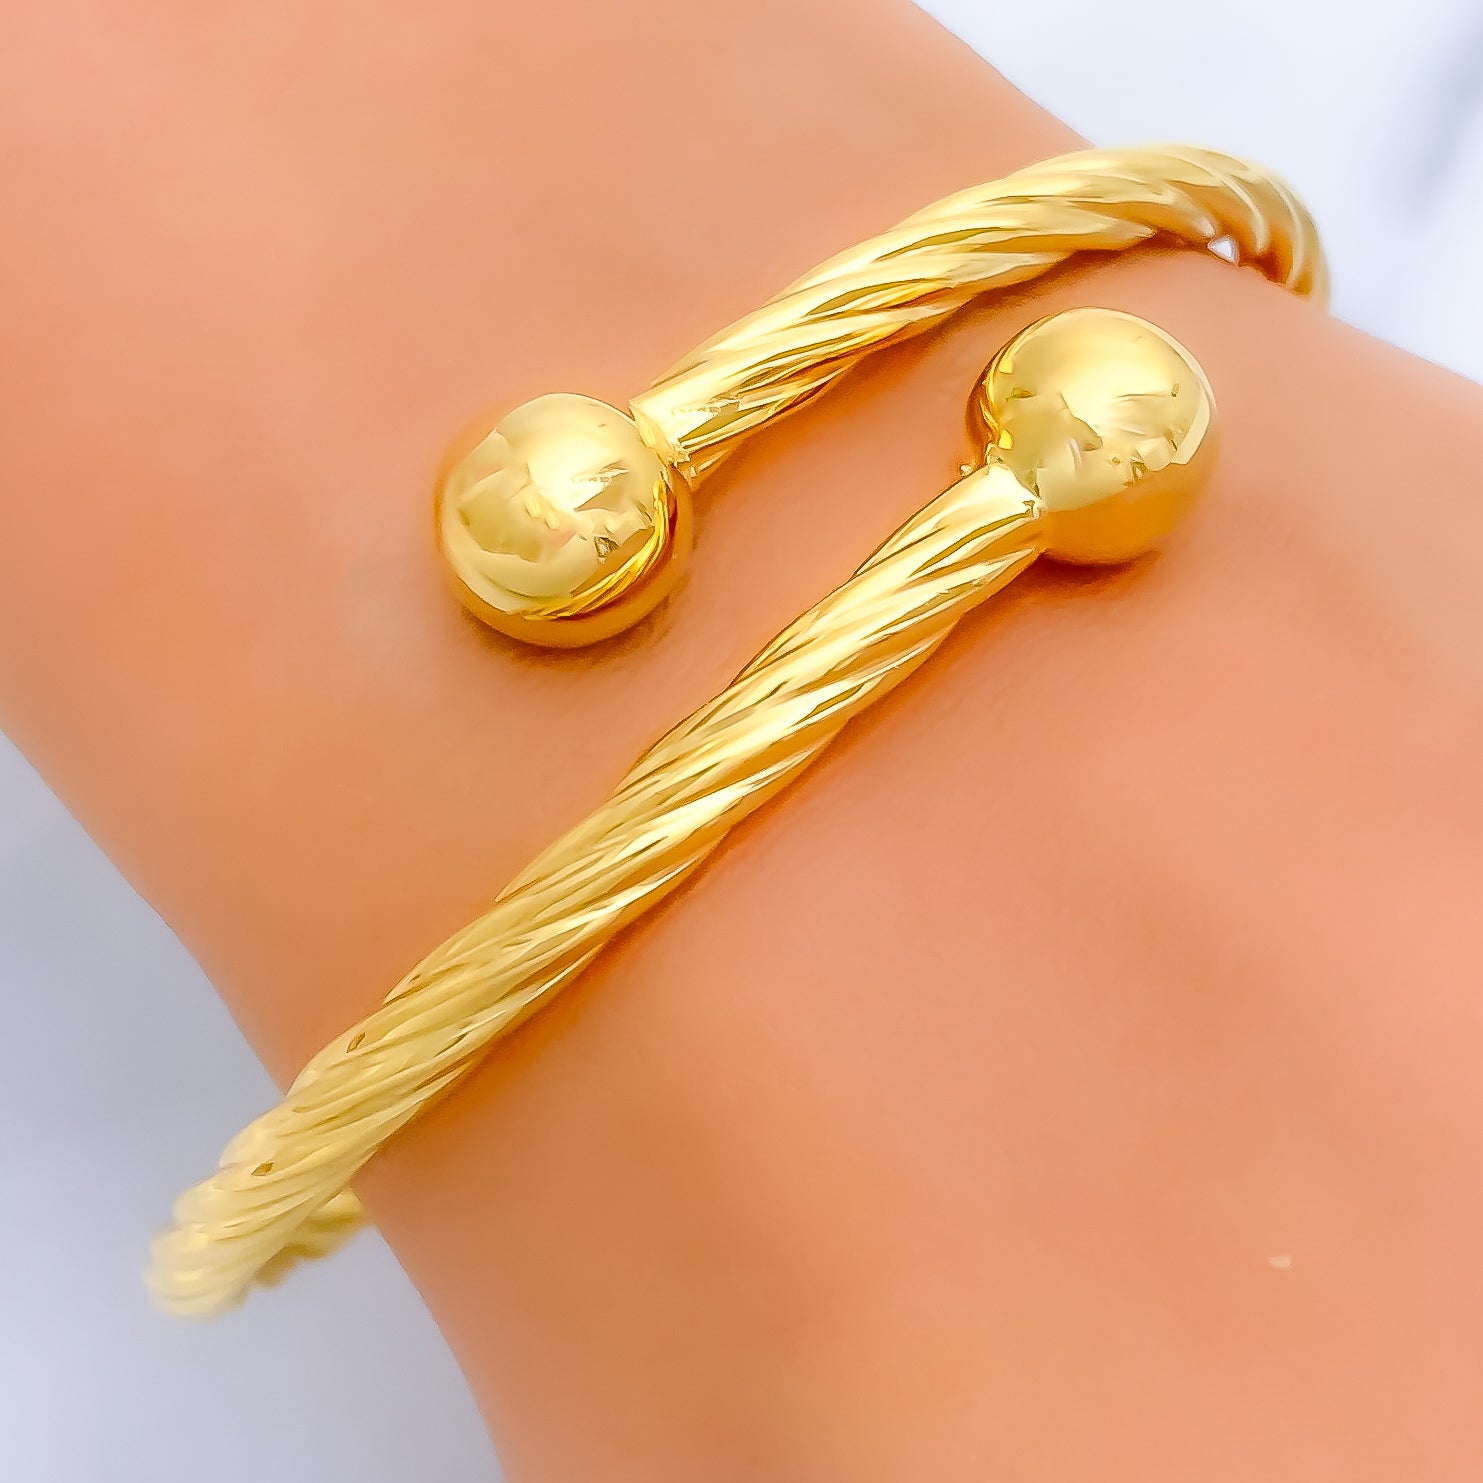 22k yellow gold hallmark Men's Gold Kada Bracelet Bangle unique stylish  jewelry | eBay